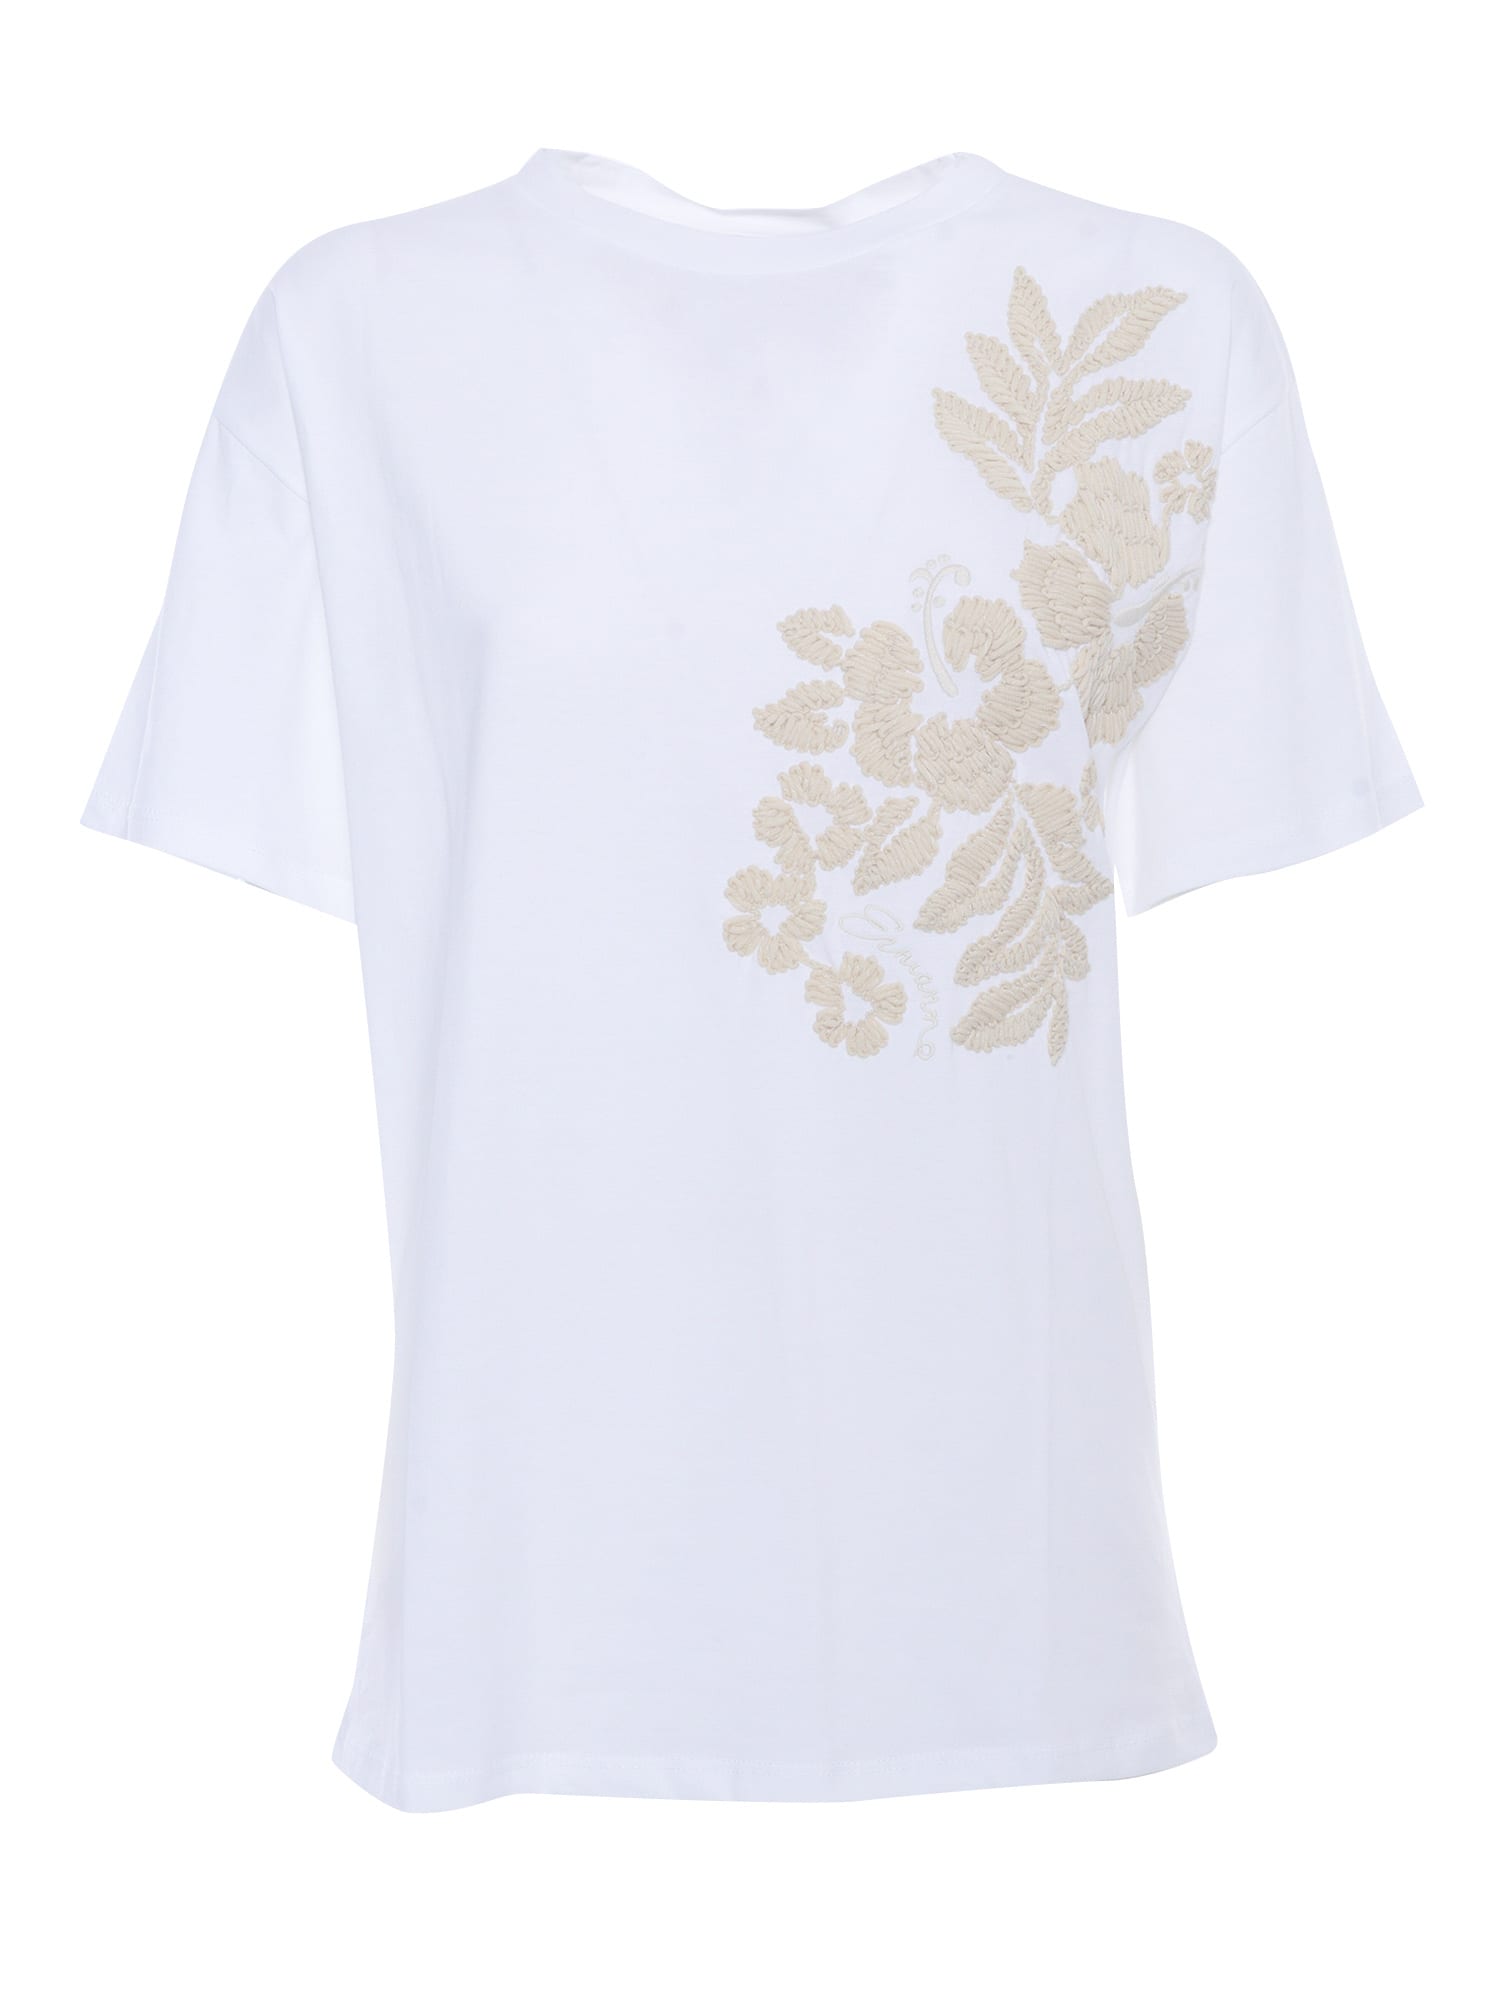 White Emroidery T-shirt